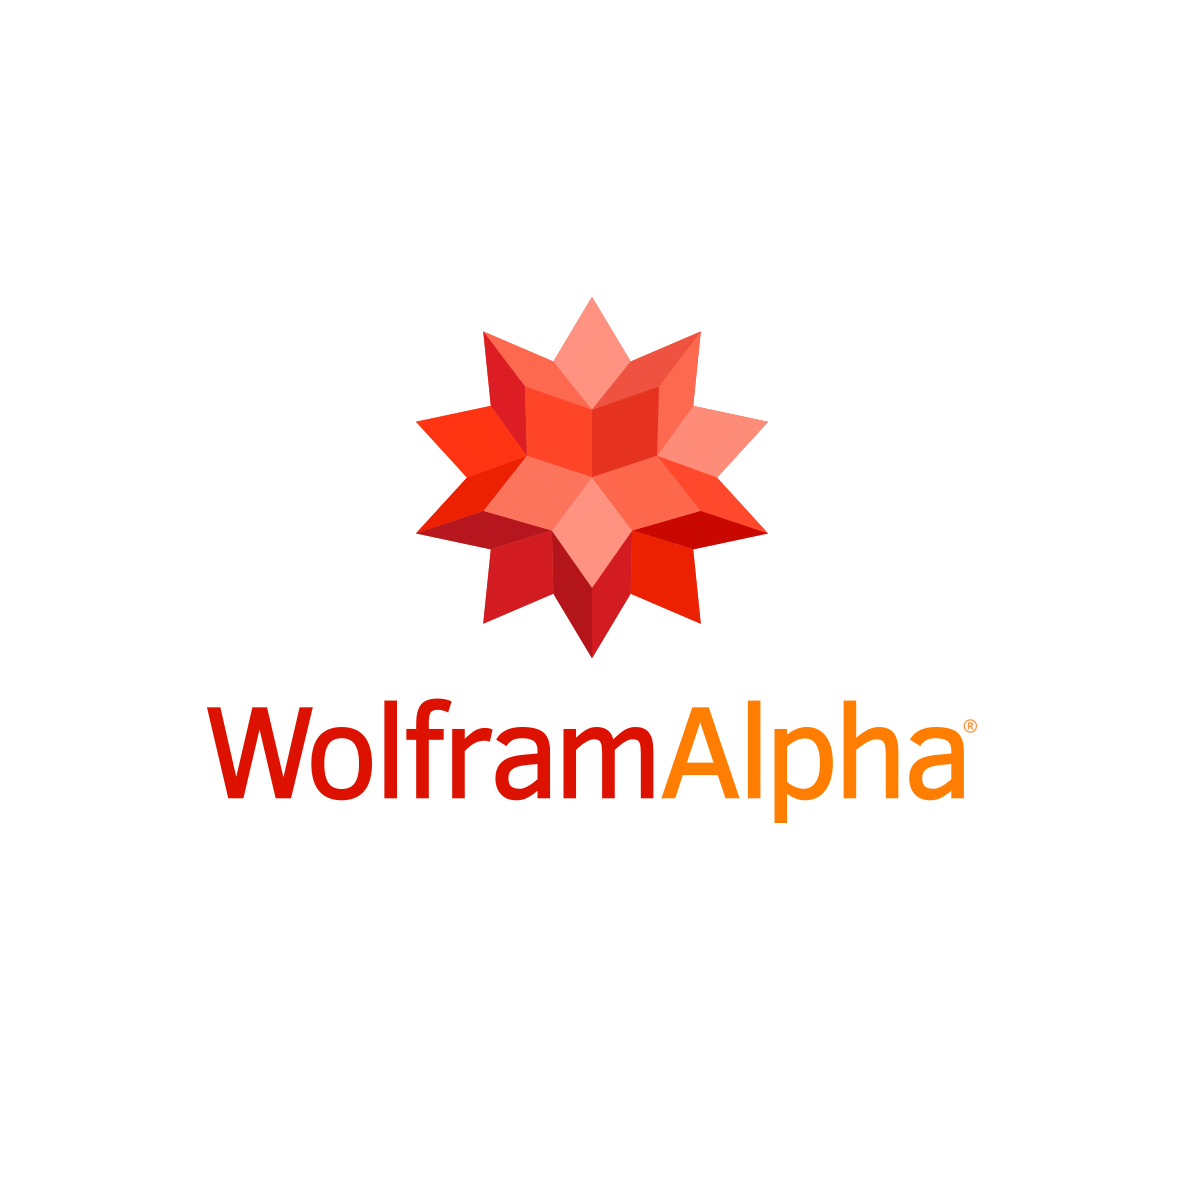 wolfram alpha logo for mathematica 14 workshop